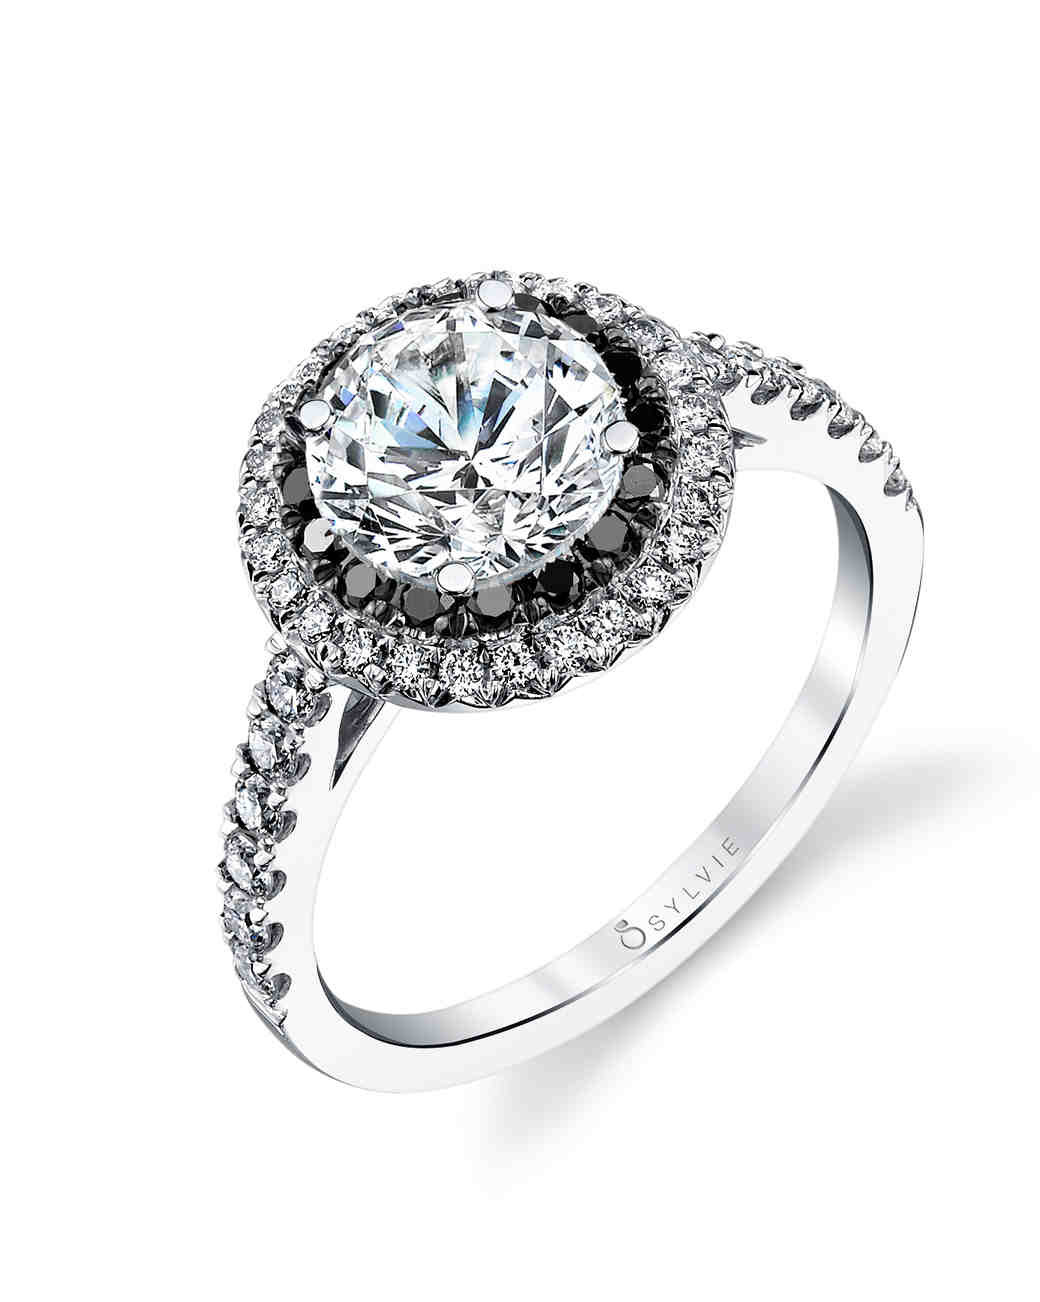 Wedding Rings Black Diamond
 The New LBD The Little Black Diamond Engagement Ring